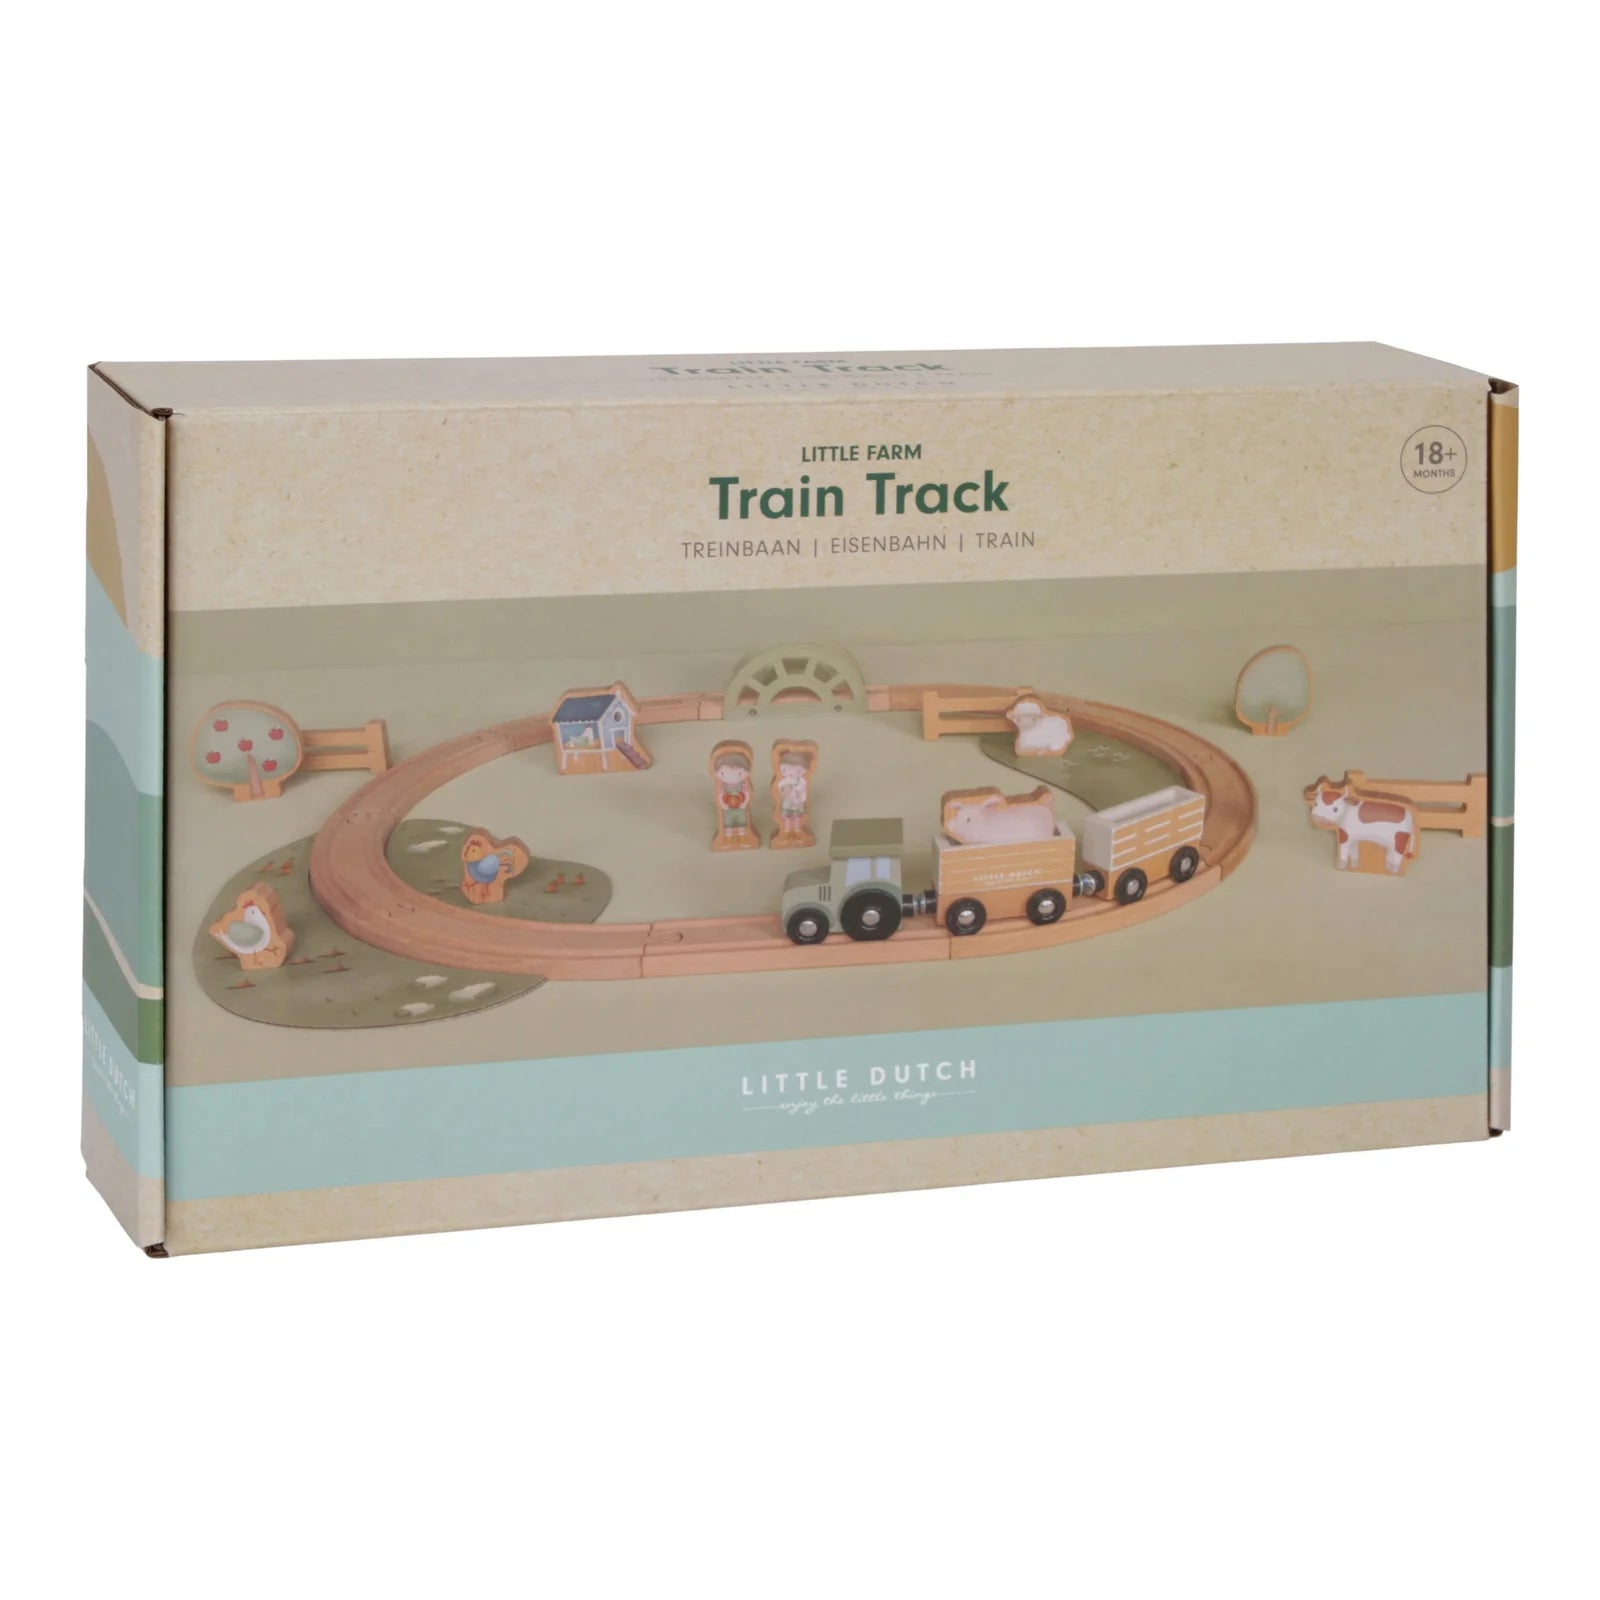 Little Dutch - Little Farm Wooden Train Track